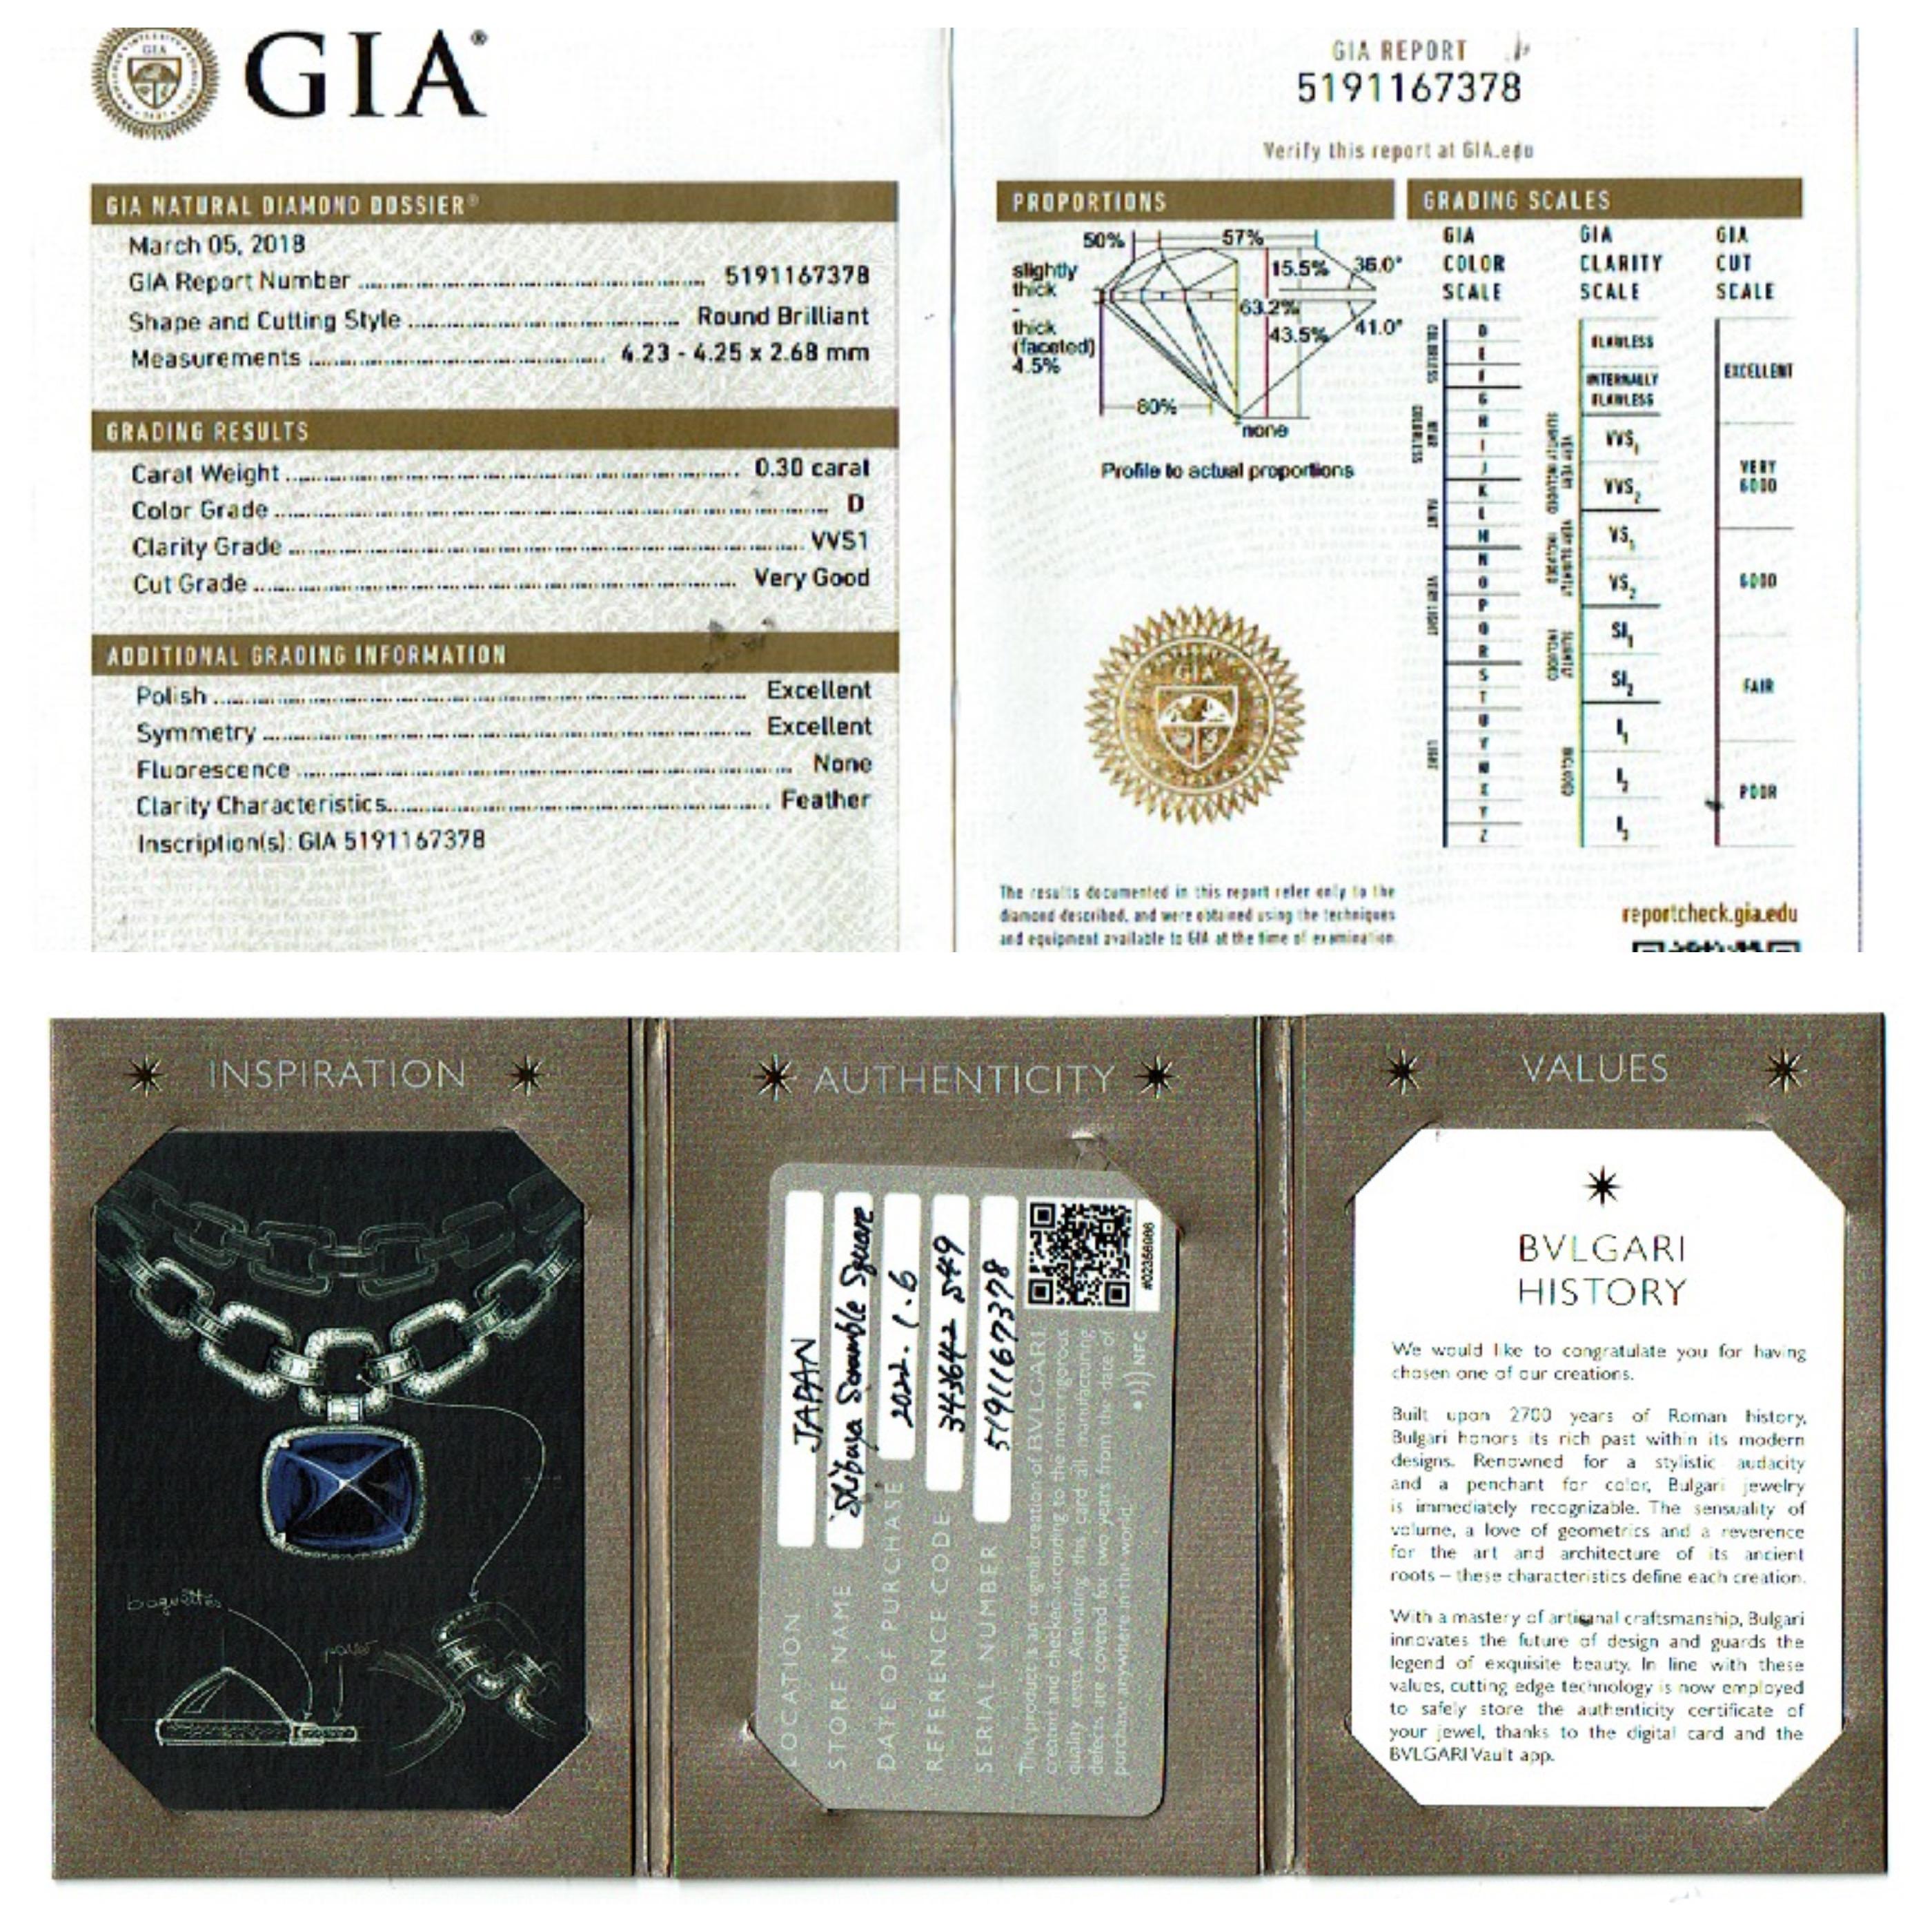 BVLGARI Dedicata A Venezia Torcello Diamond Engagement Ring
Style:  Torcello
Ref. number:  343642 S49
GIA:  5191167378
Metal:  Platinum PT950
Size:  4.75
Main Diamond:  Round Brilliant Diamond 0.30 cts 
Color & Clarity:  D, VVS1
Hallmark:  BVLGARI